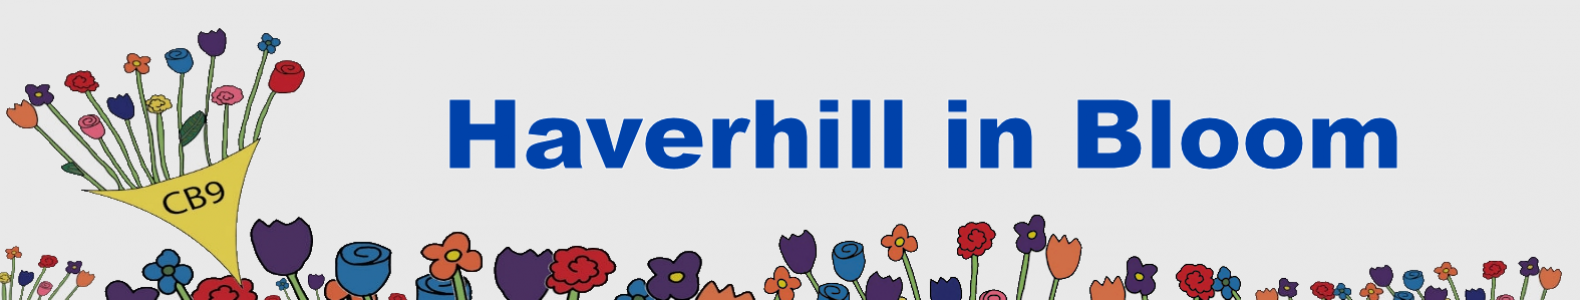 Haverhill in Bloom